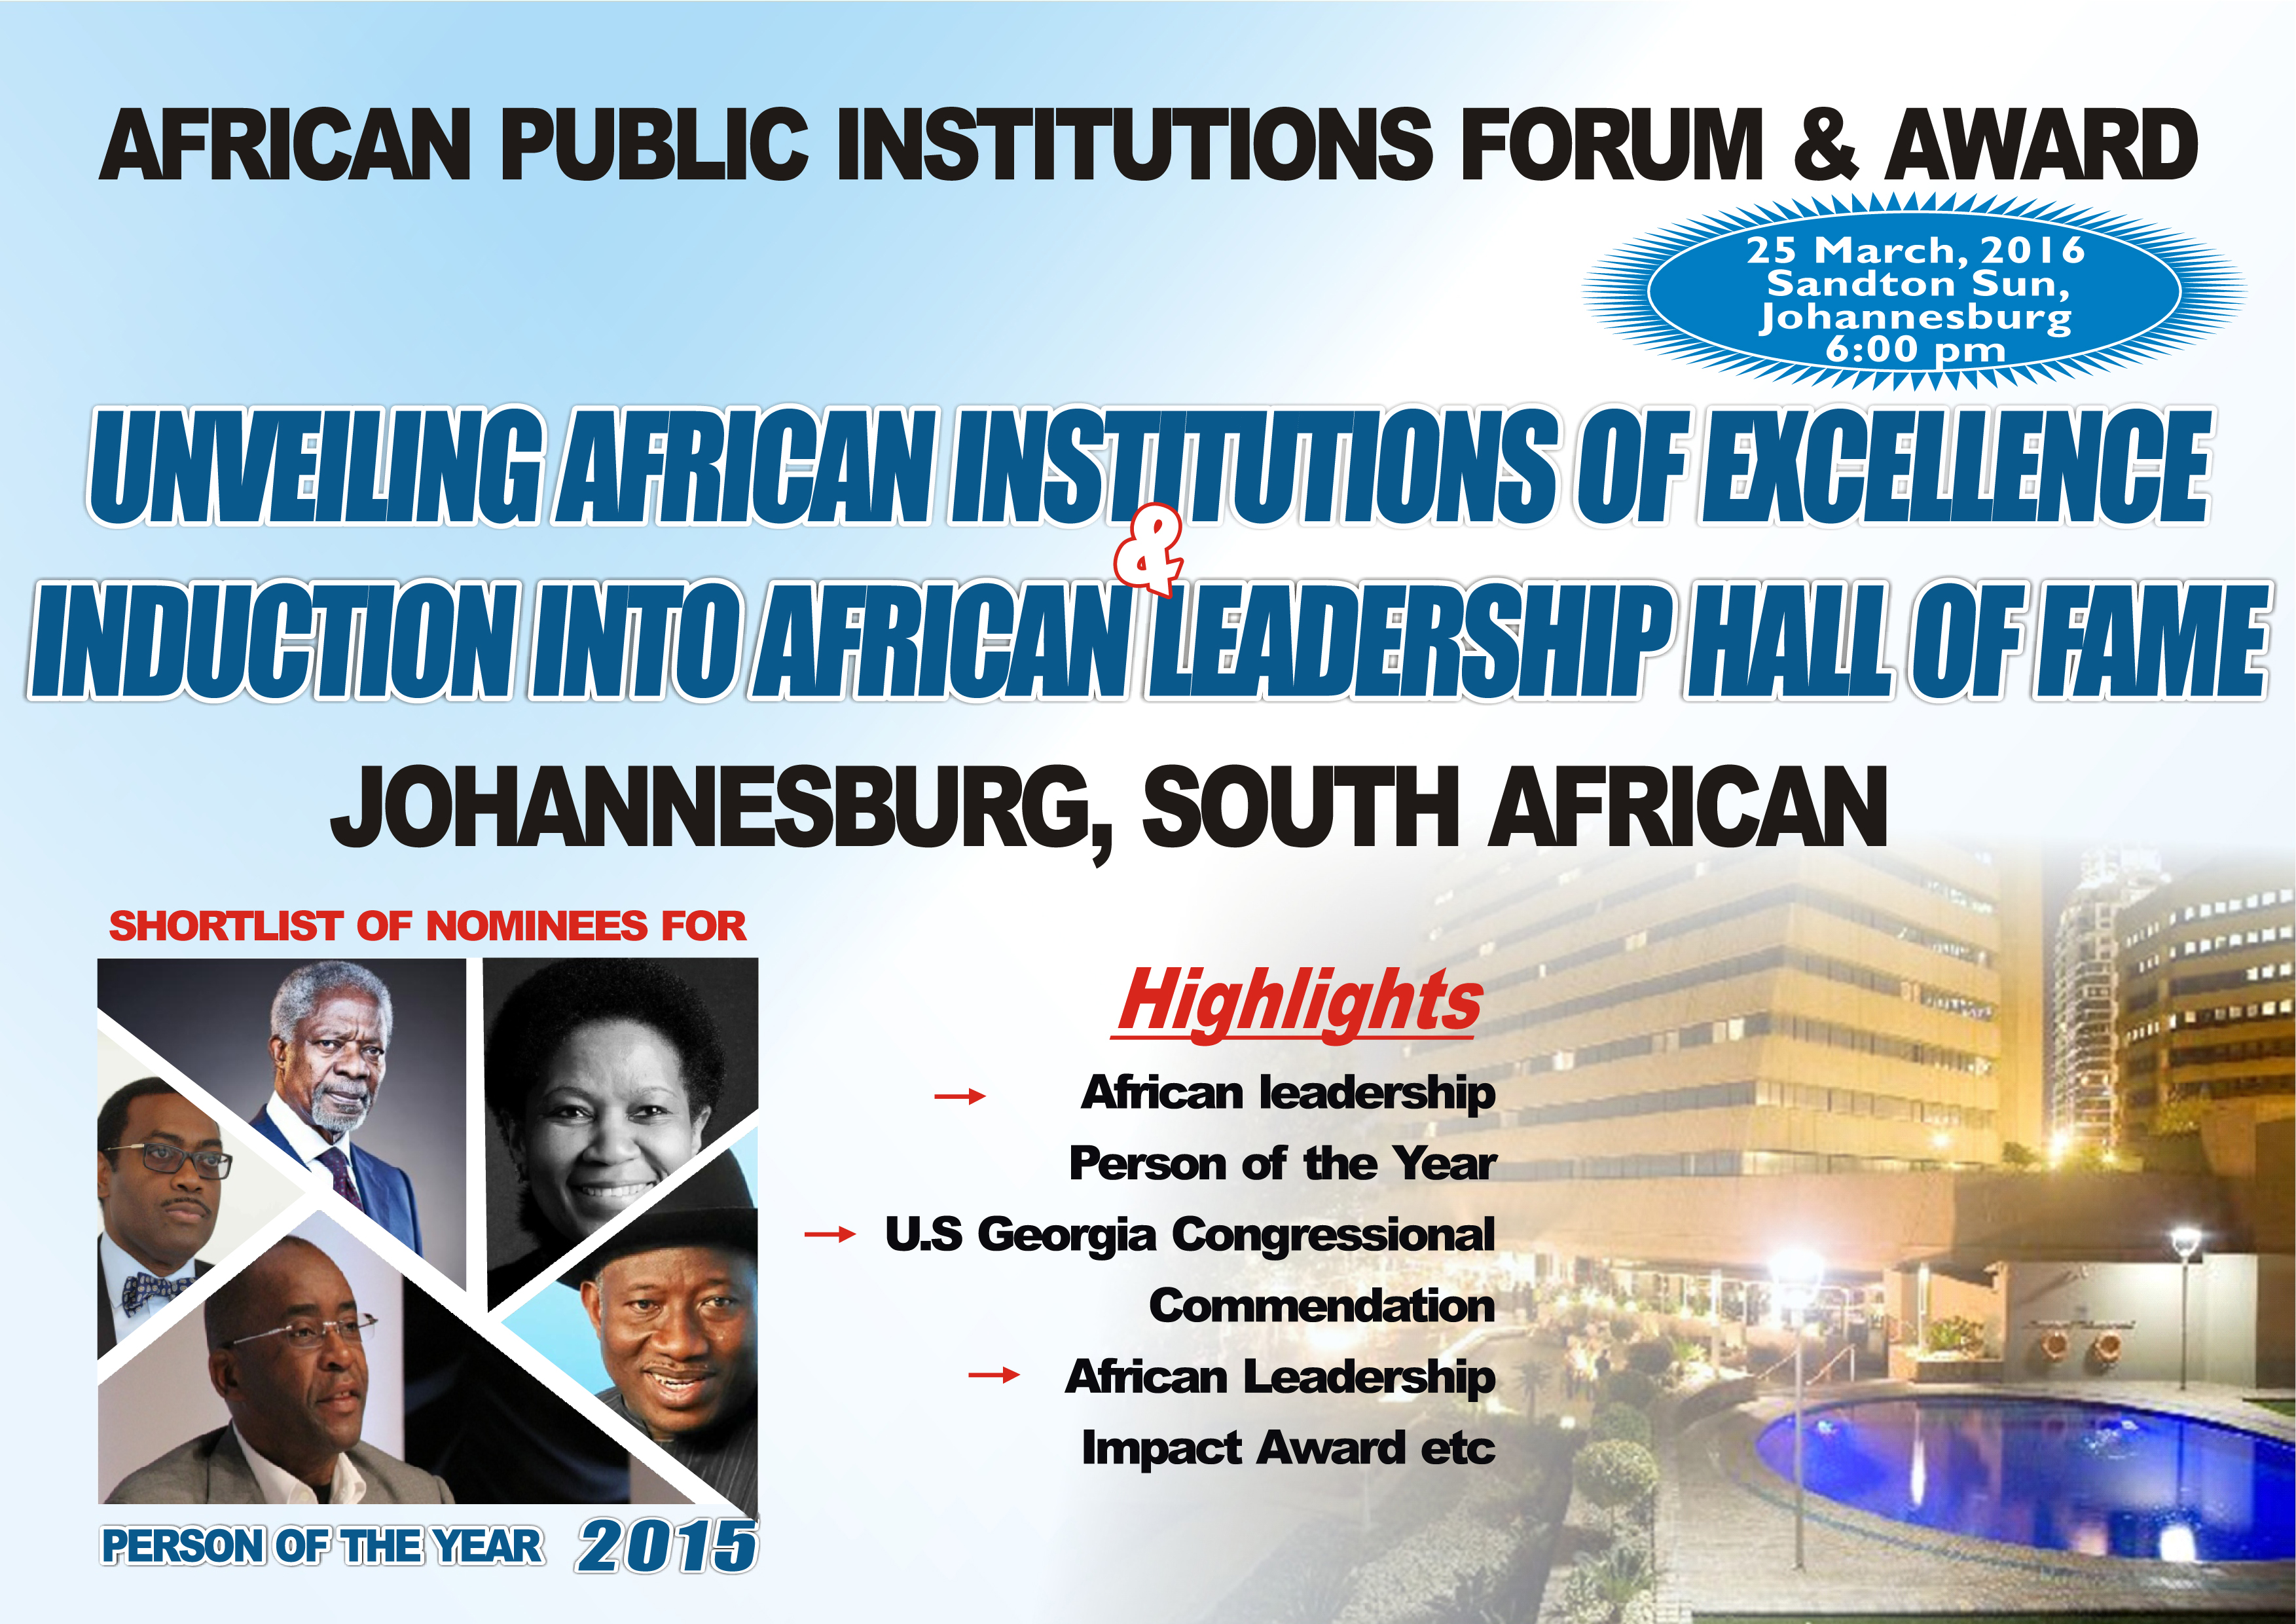 African Public Institutions Forum & Award, Johannesburg